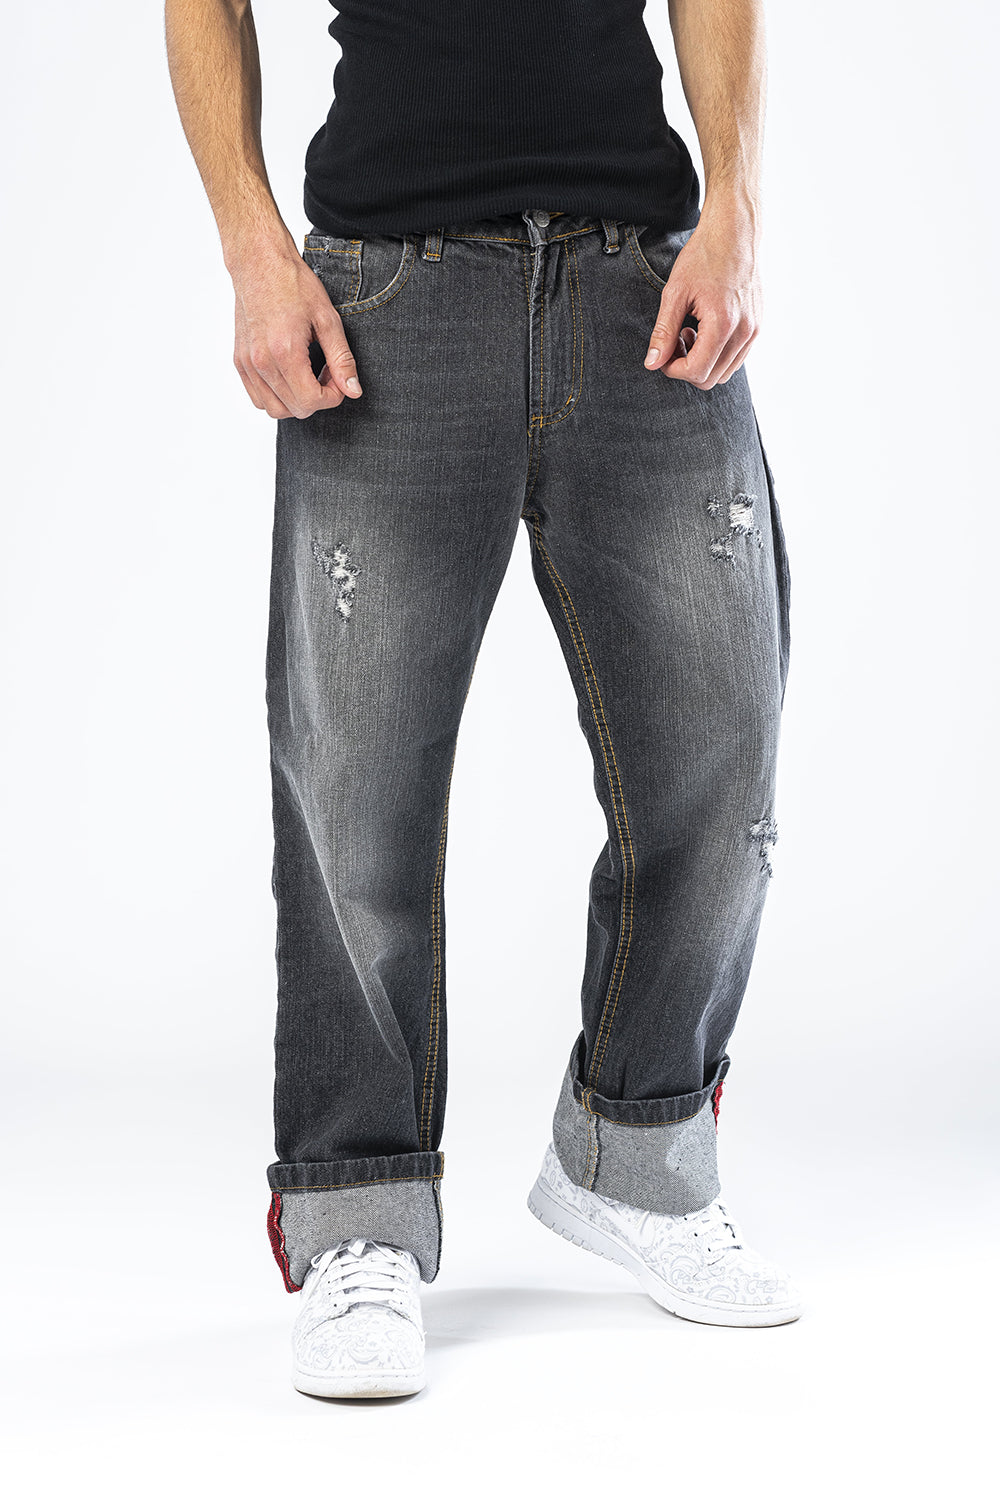 Effemme Exclusive Lab stonewash fit gray wash jeans